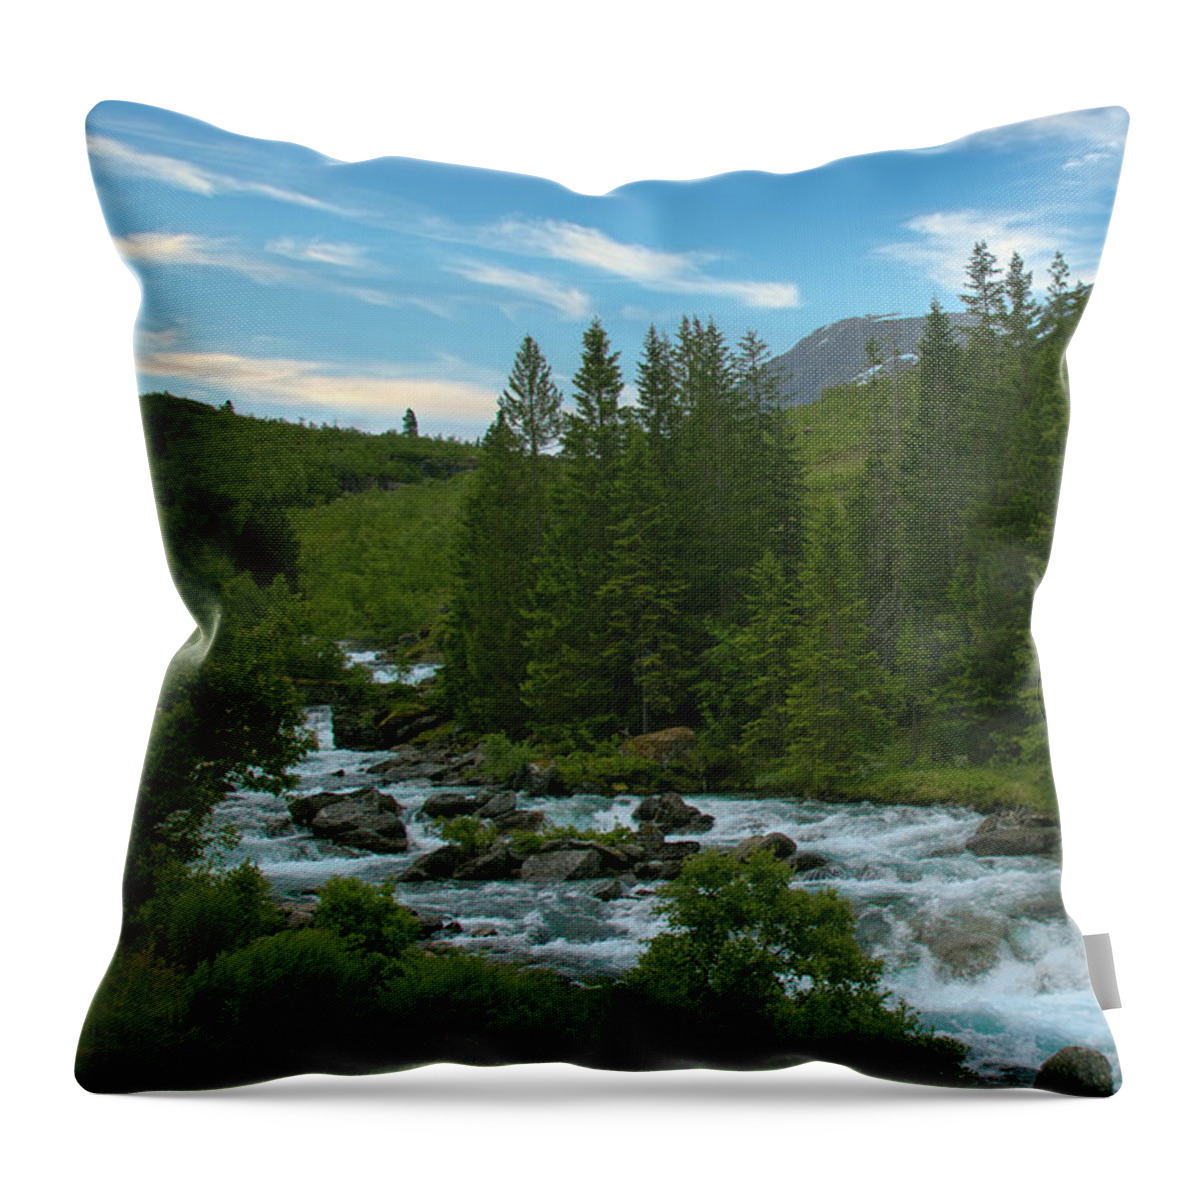 Blue Sky Throw Pillow featuring the photograph Norwegian Mountain Stream by Matthew DeGrushe